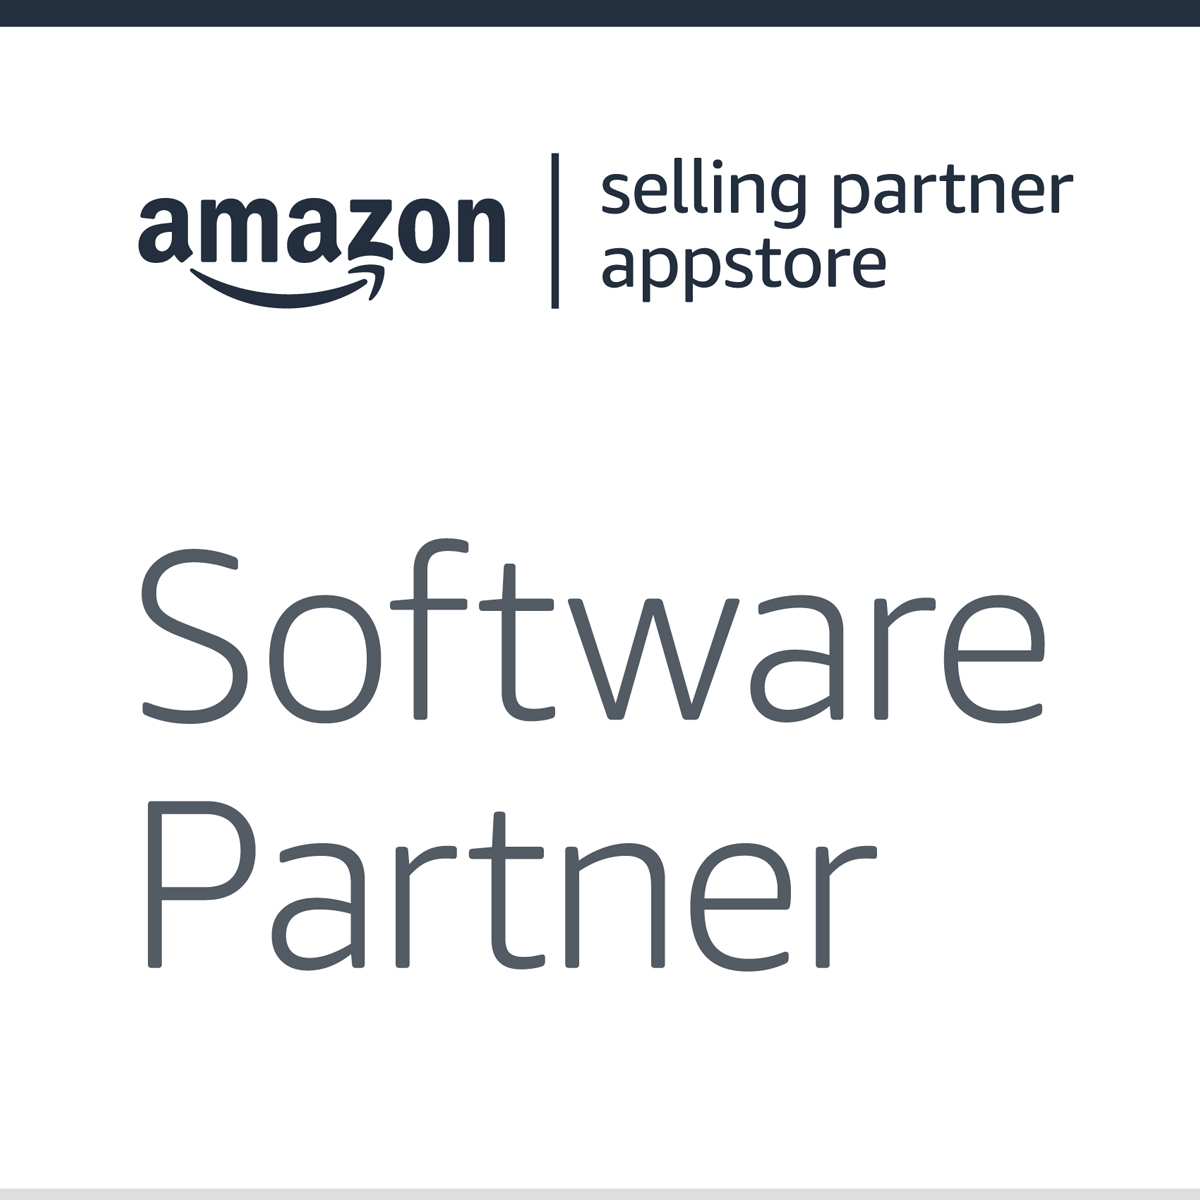 amazon-software_partners-badge